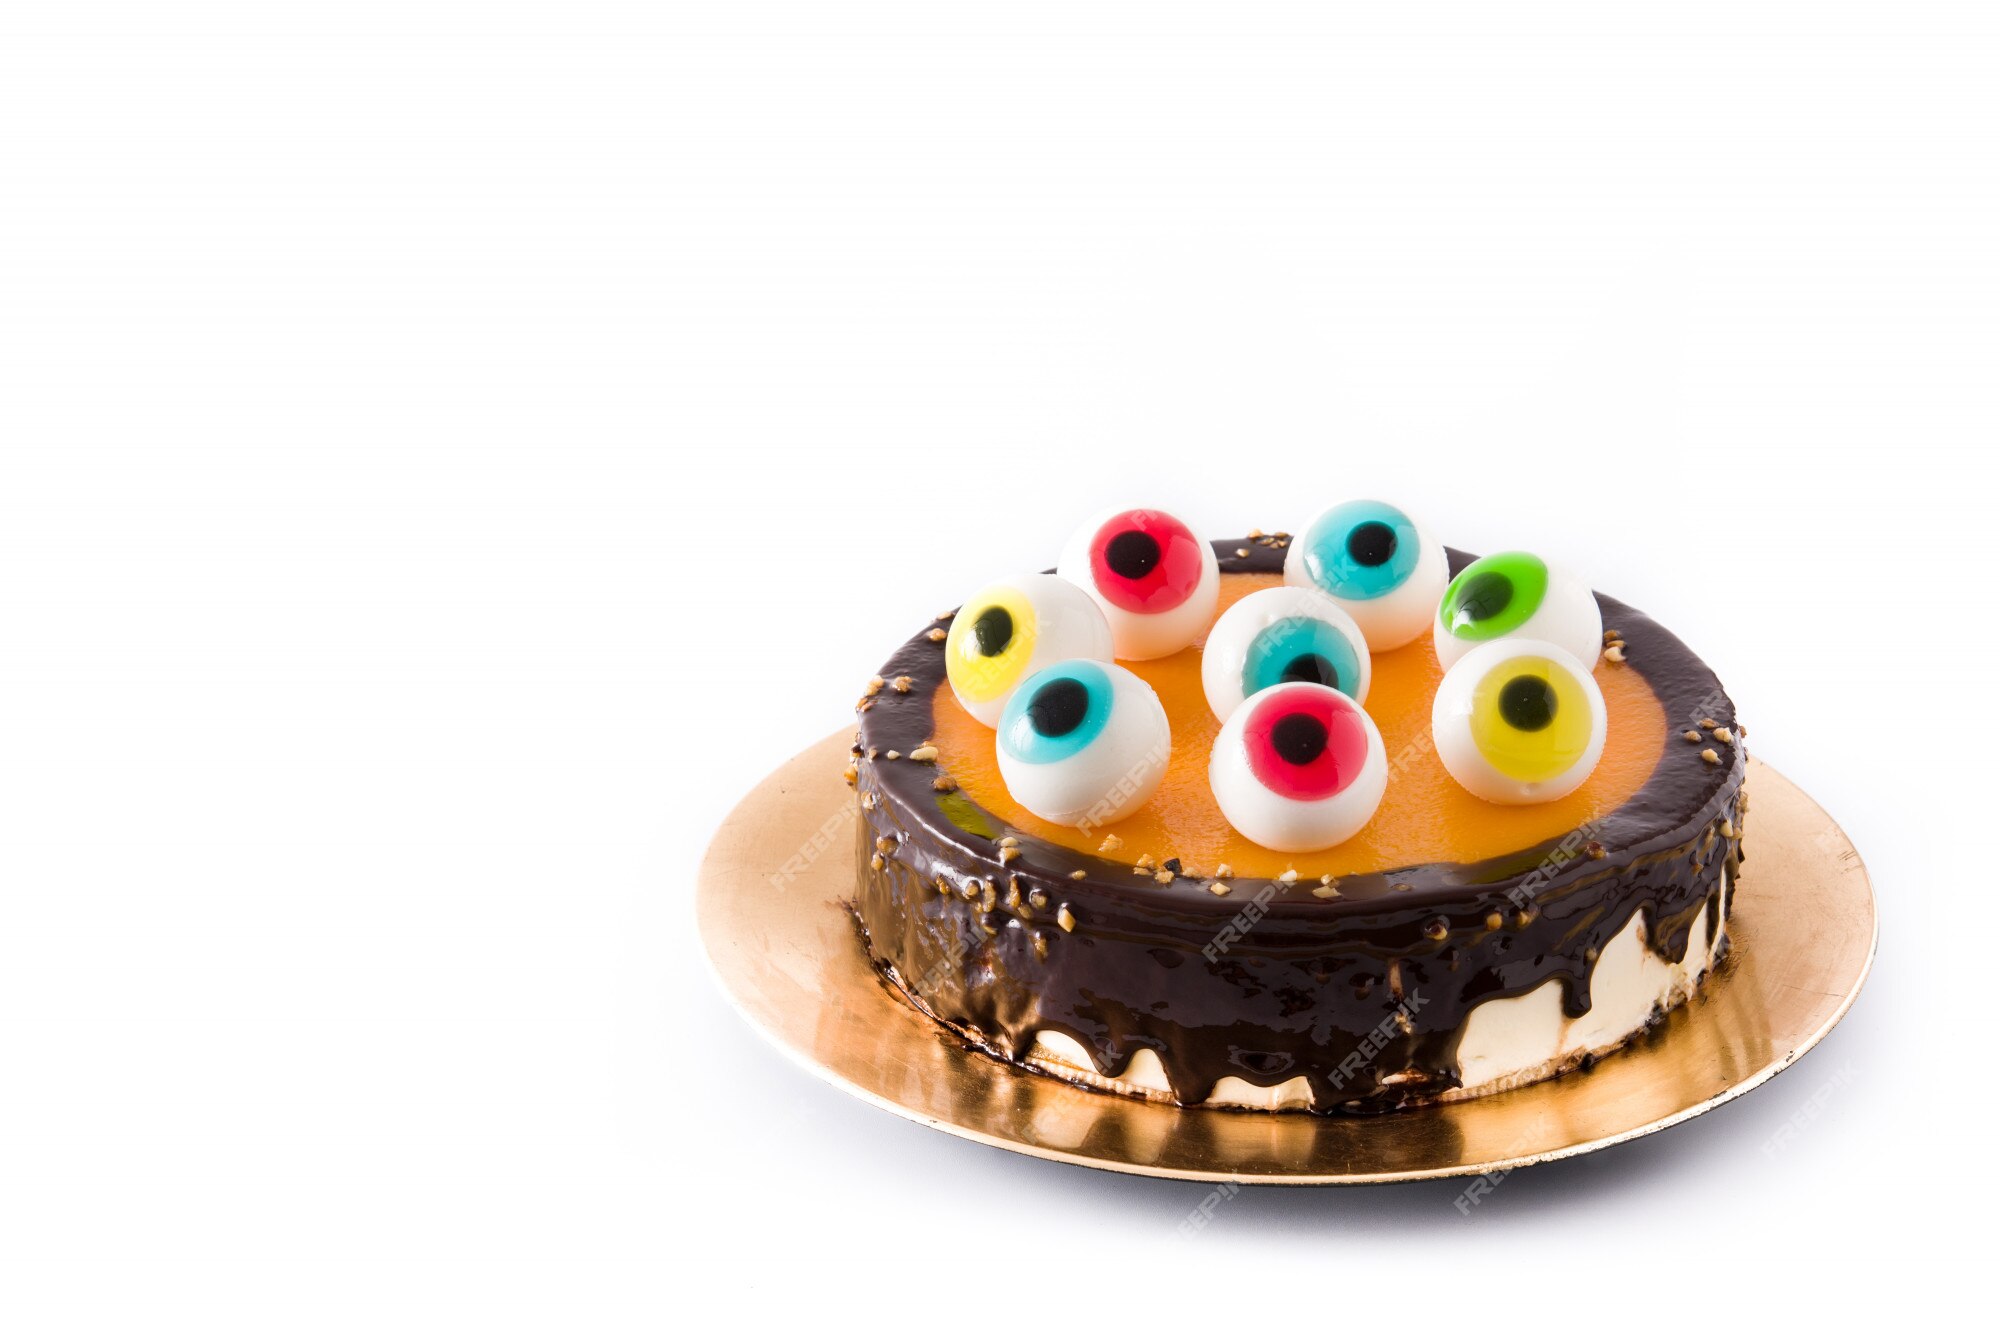 Premium Photo | Halloween cake with candy eyes decoration isolated